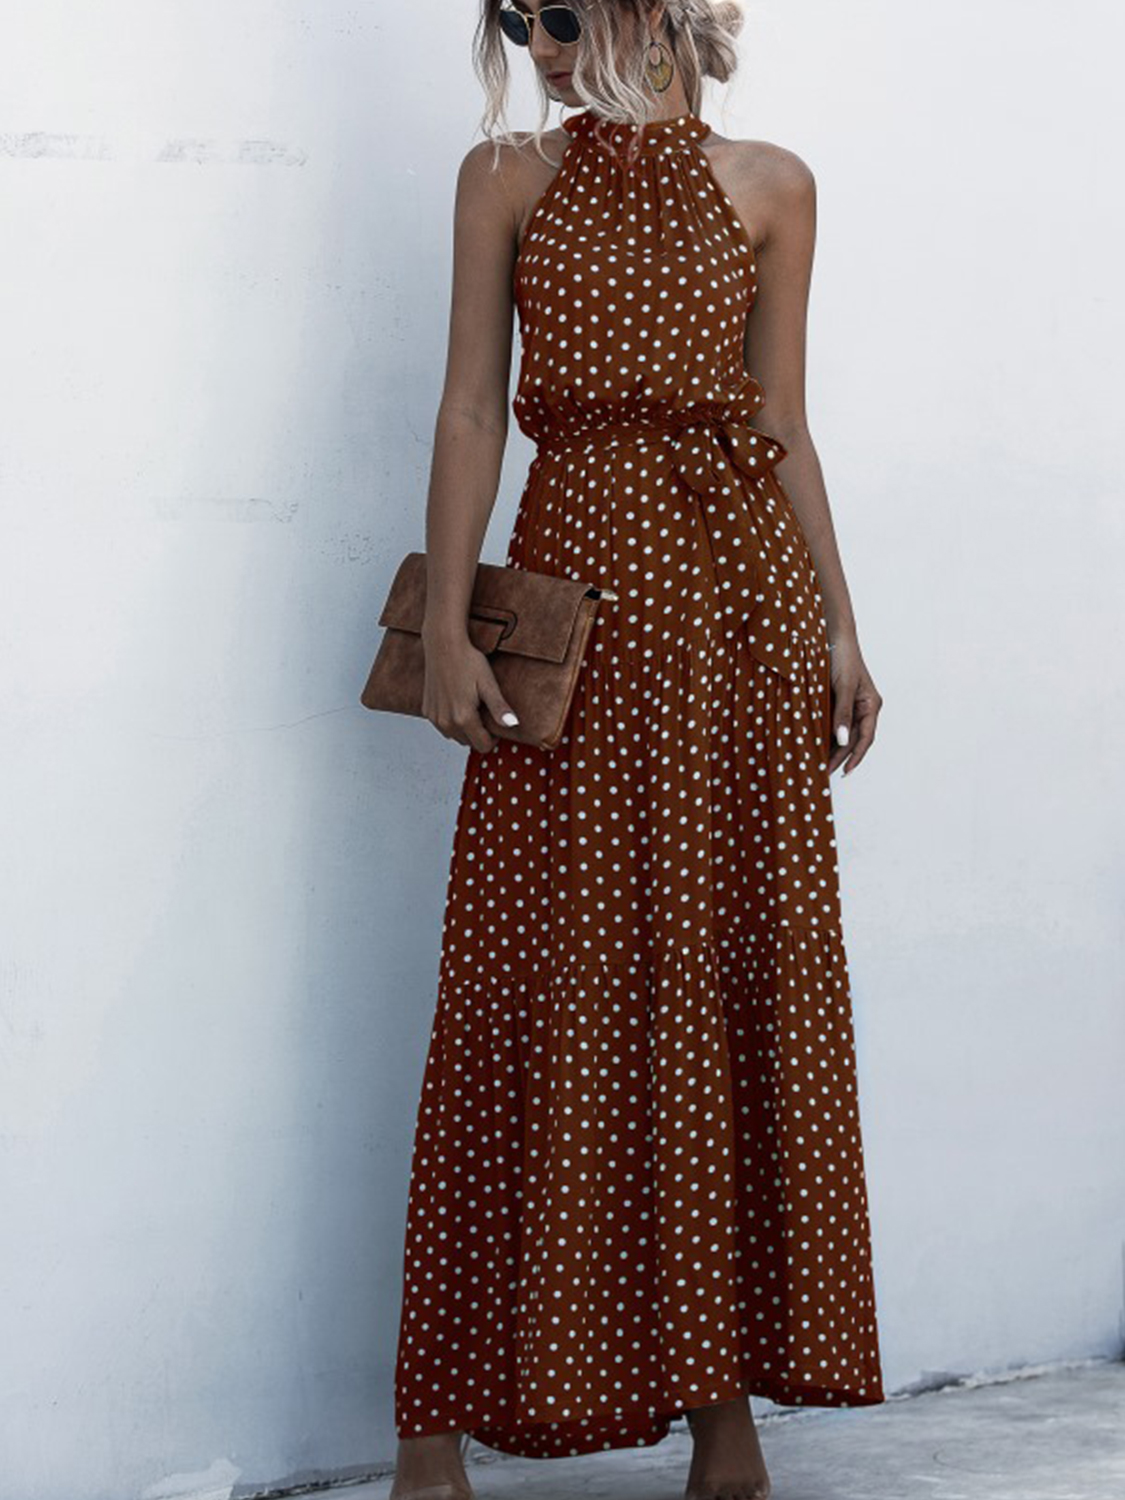 Brown Floral Print Sleeveless Maxi Dress | Choies